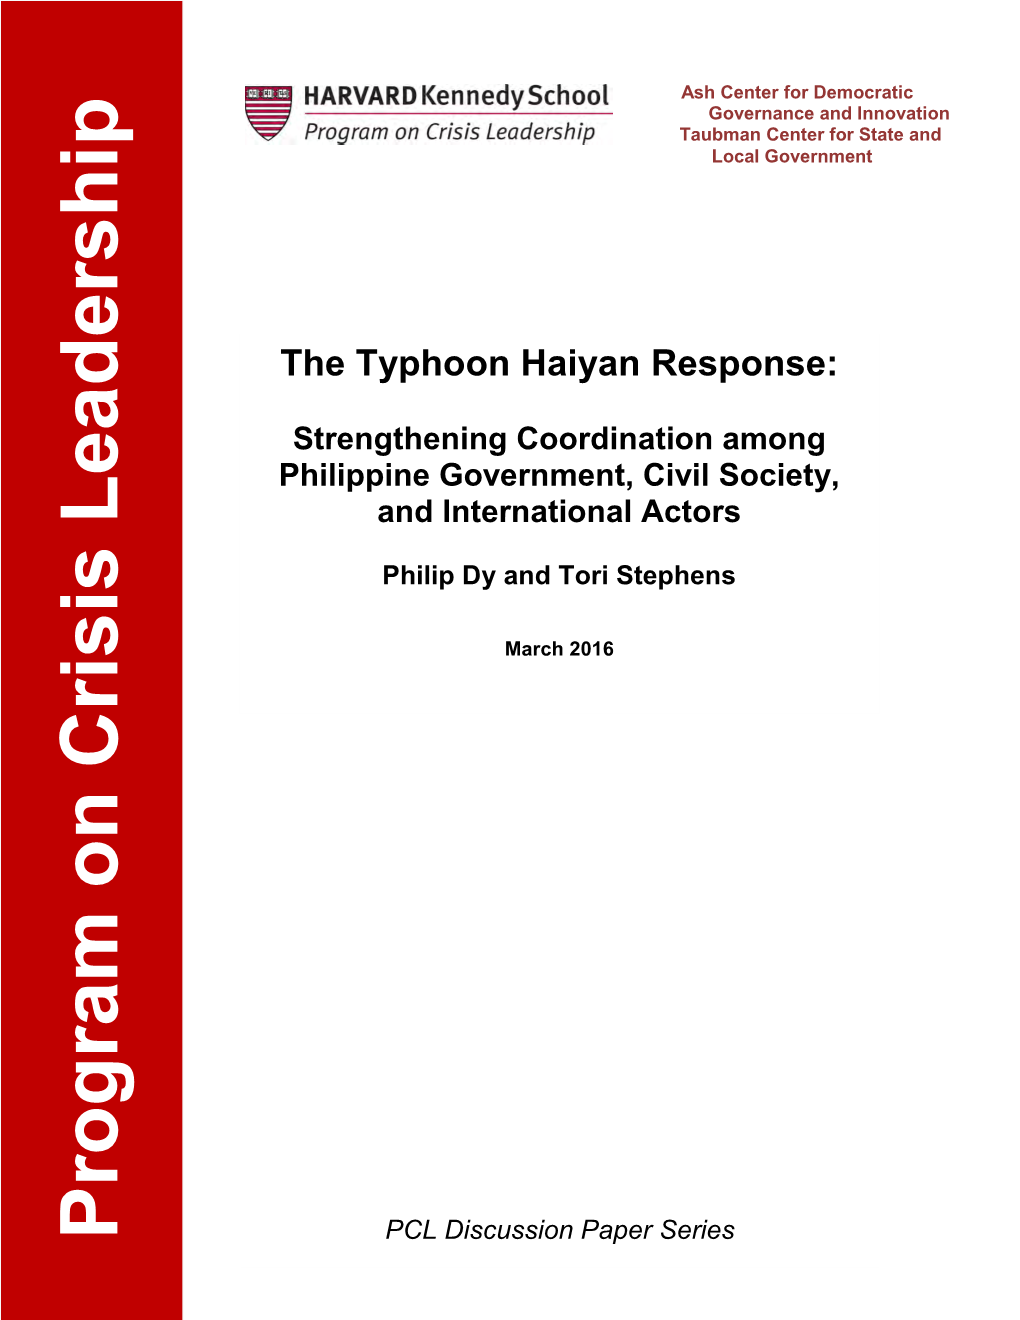 The Typhoon Haiyan Response